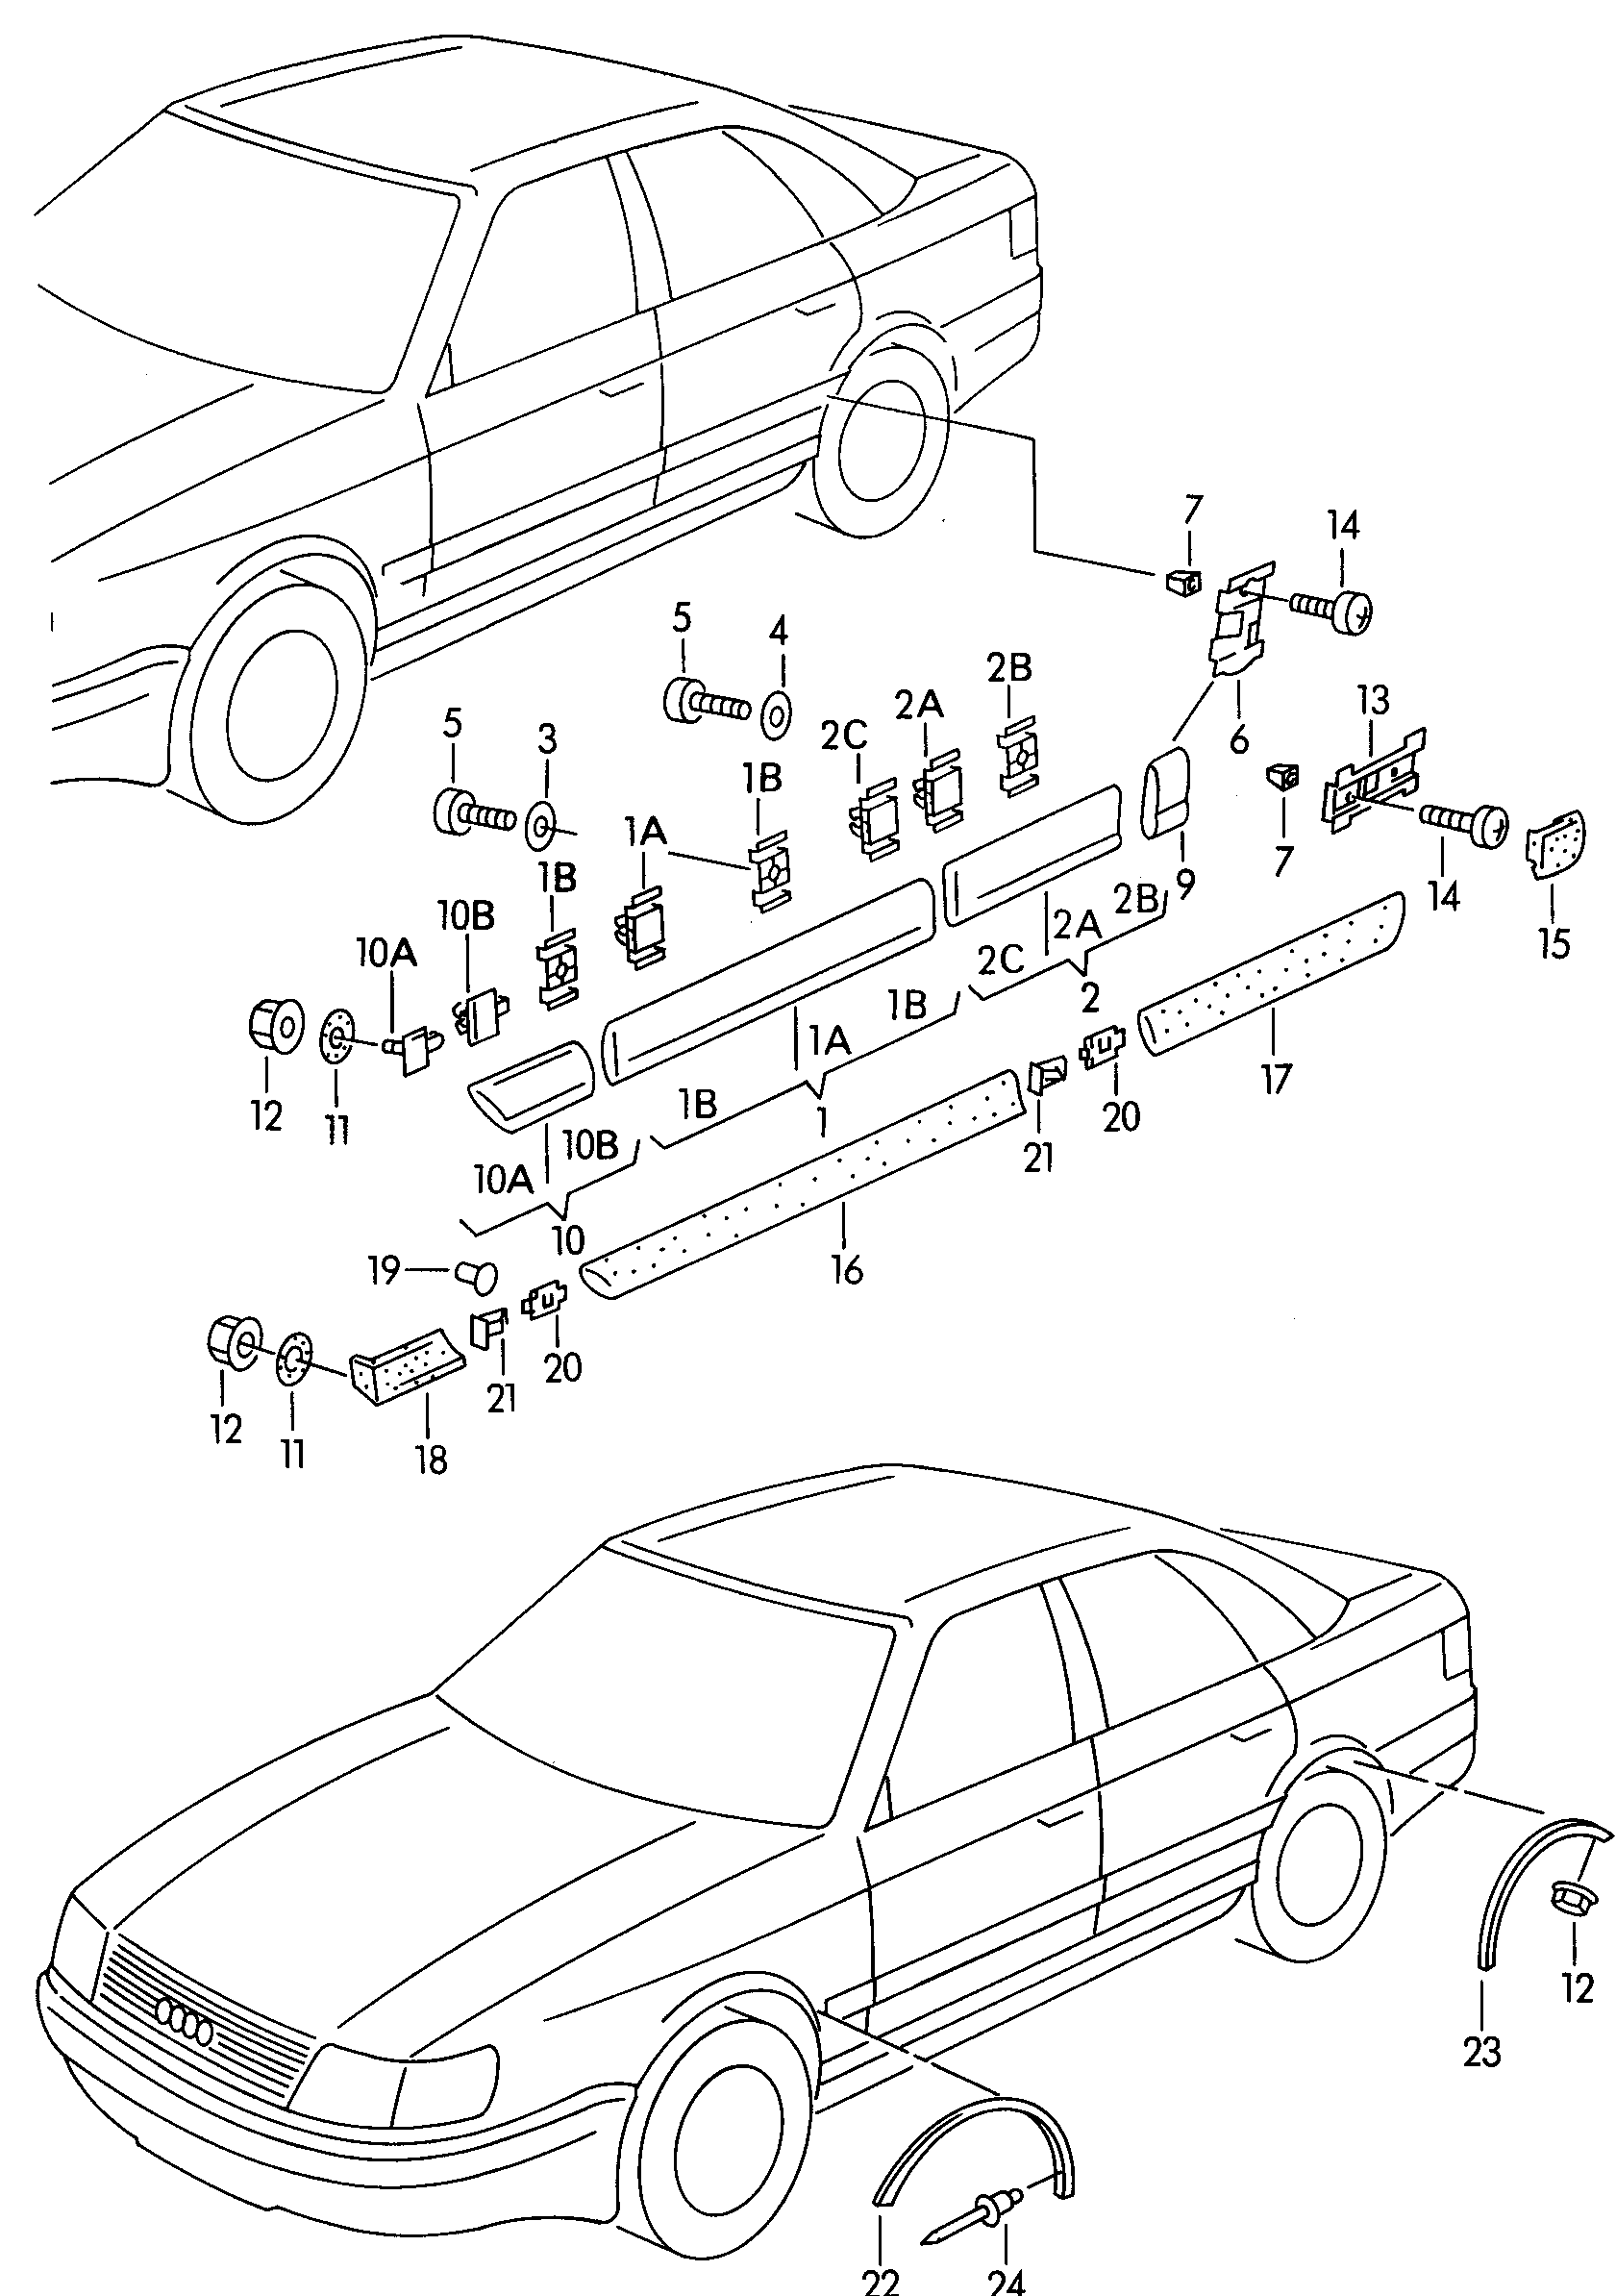 listwy ozdobne i nakladki na
blotnik, drzwi i pos... - Audi A6/Avant(A6)  